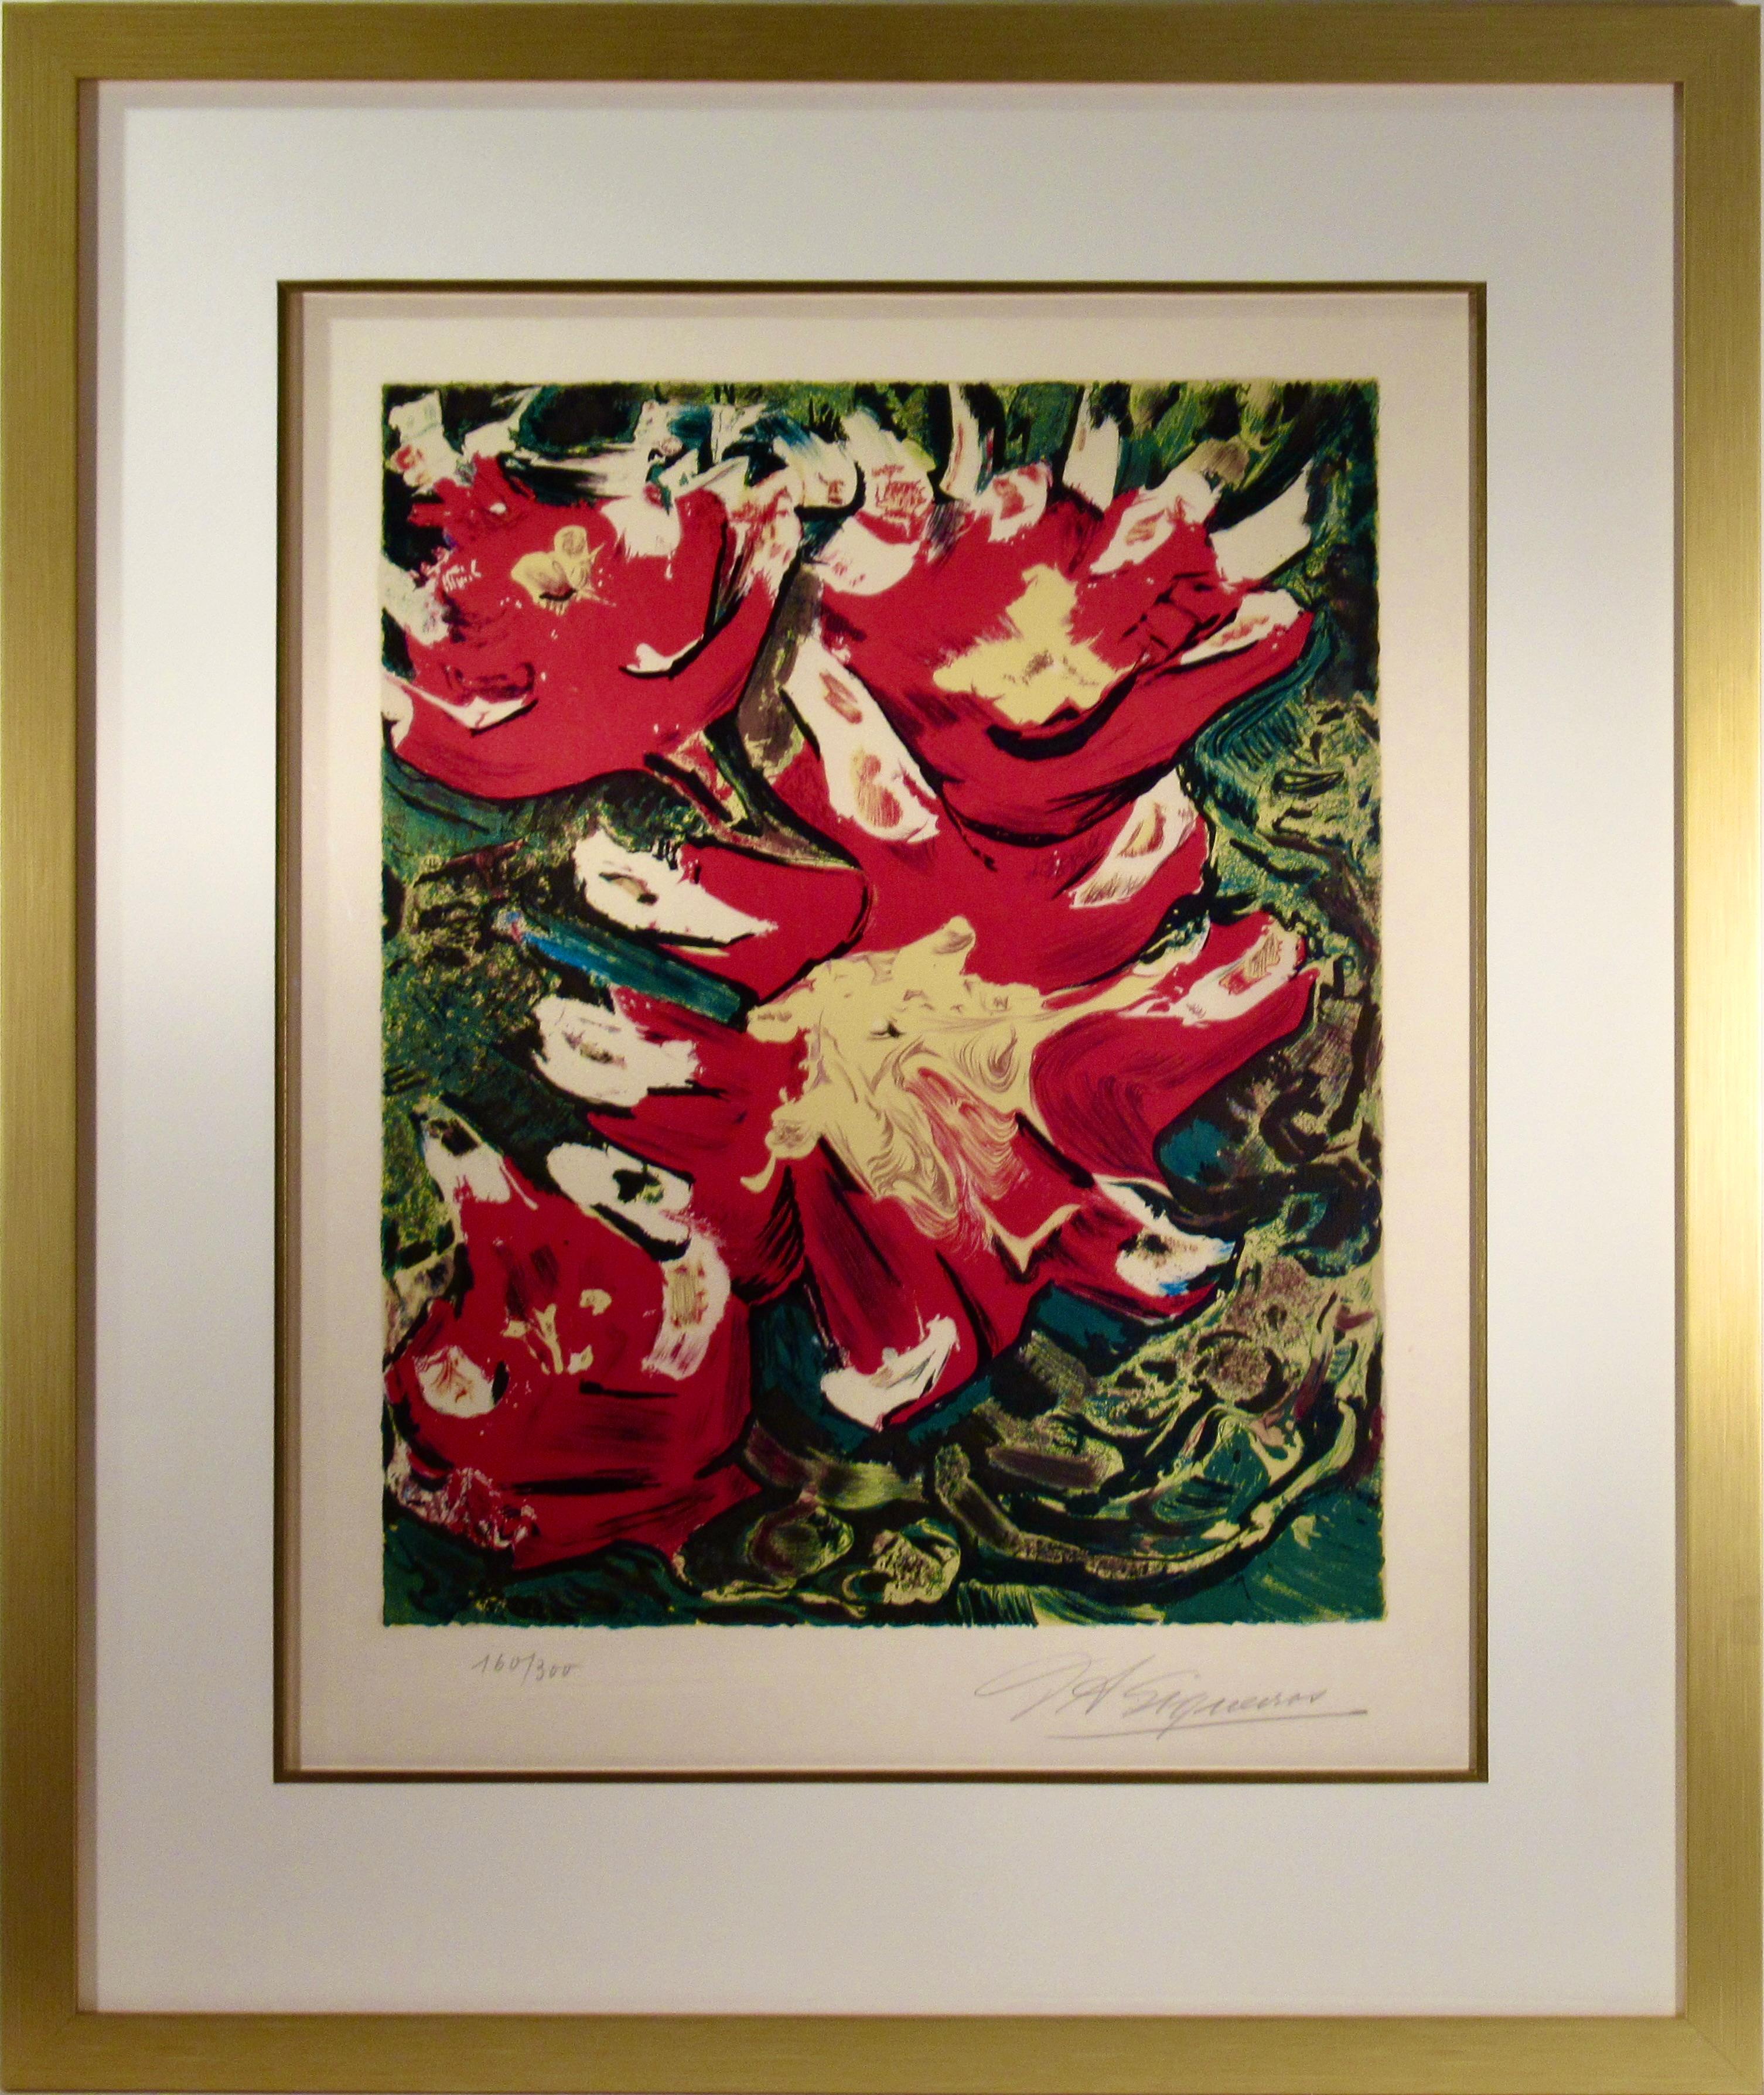 David Alfaro Siqueiros Landscape Print - "Tierra Roja" from the "Mexican suite"